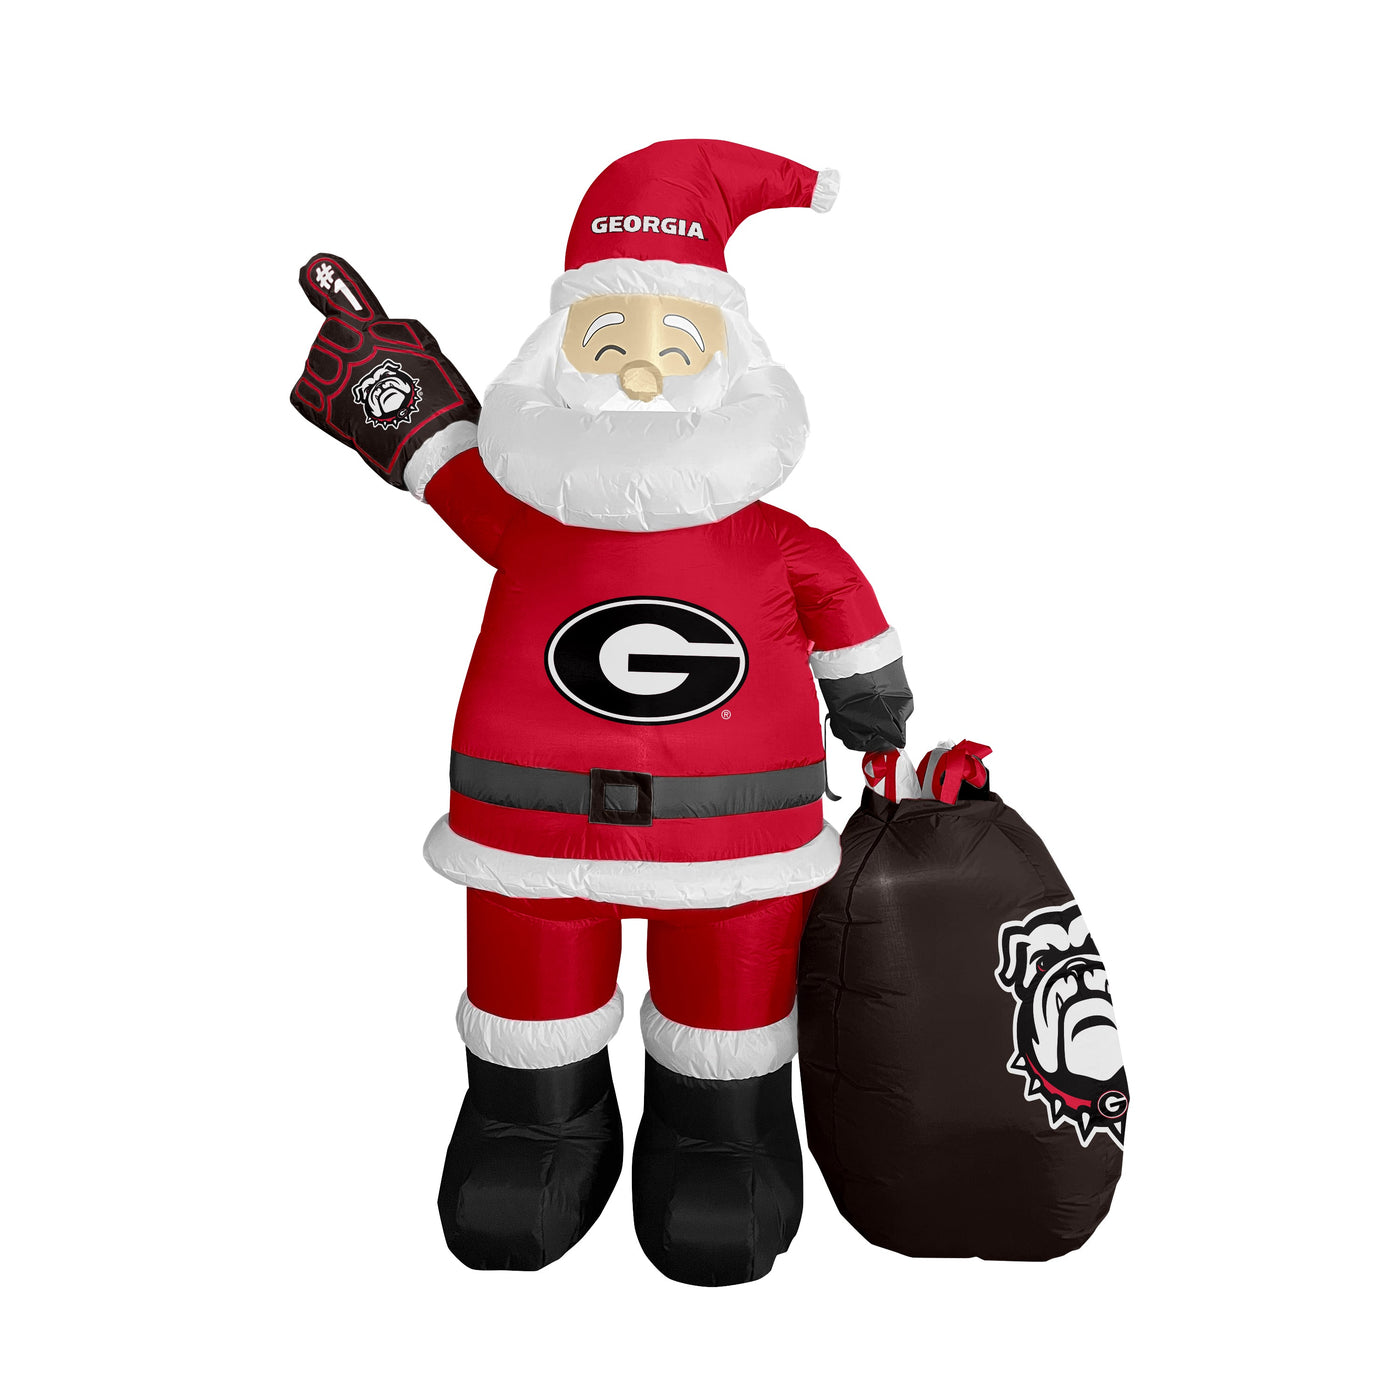 Georgia Santa Claus Yard Inflatable